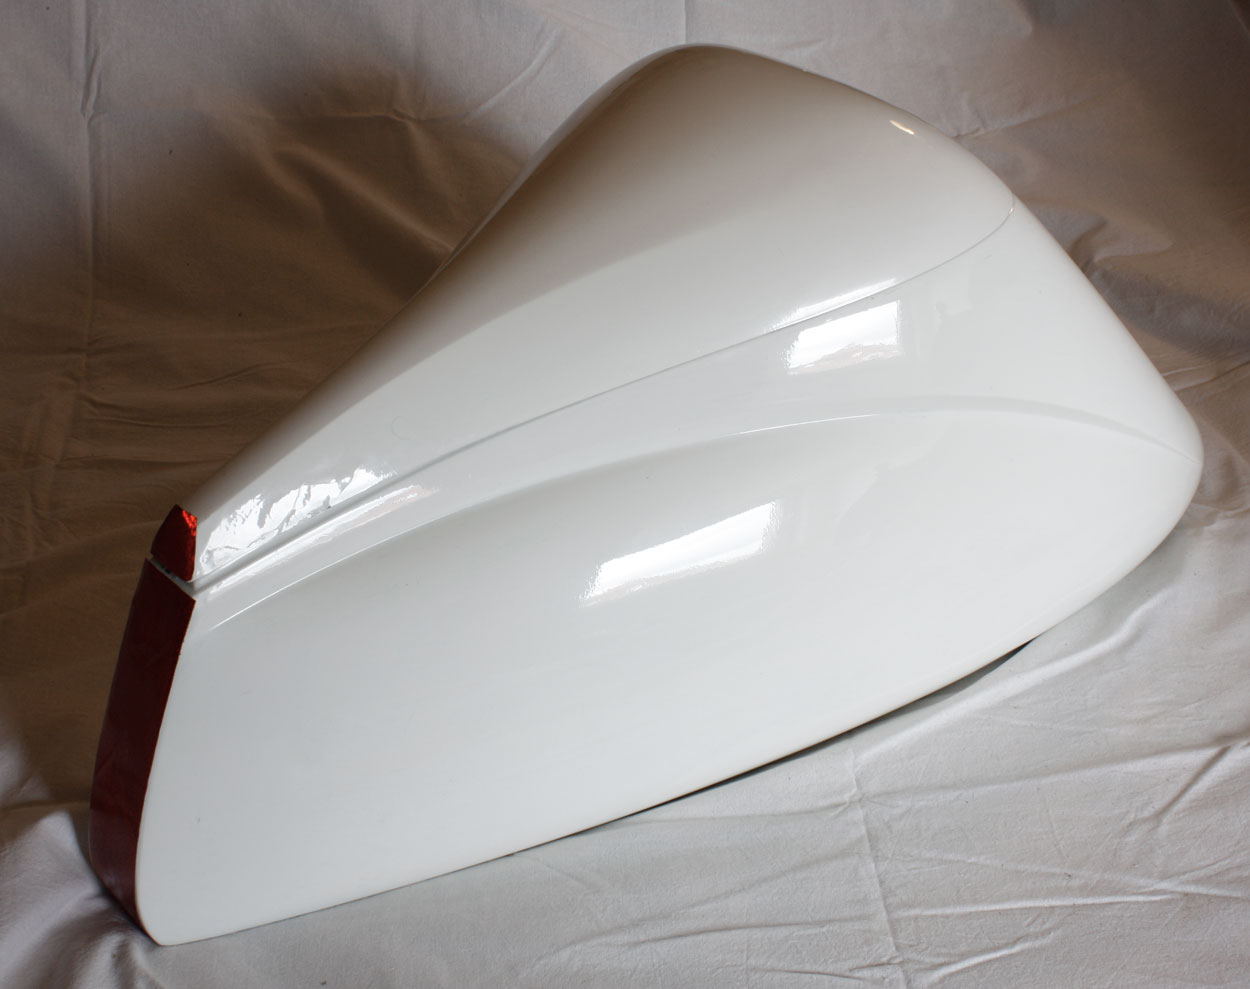 Talbox Dolphin, color: white for recumbent bike. Increases aerodynamic speed of recumbent bike.